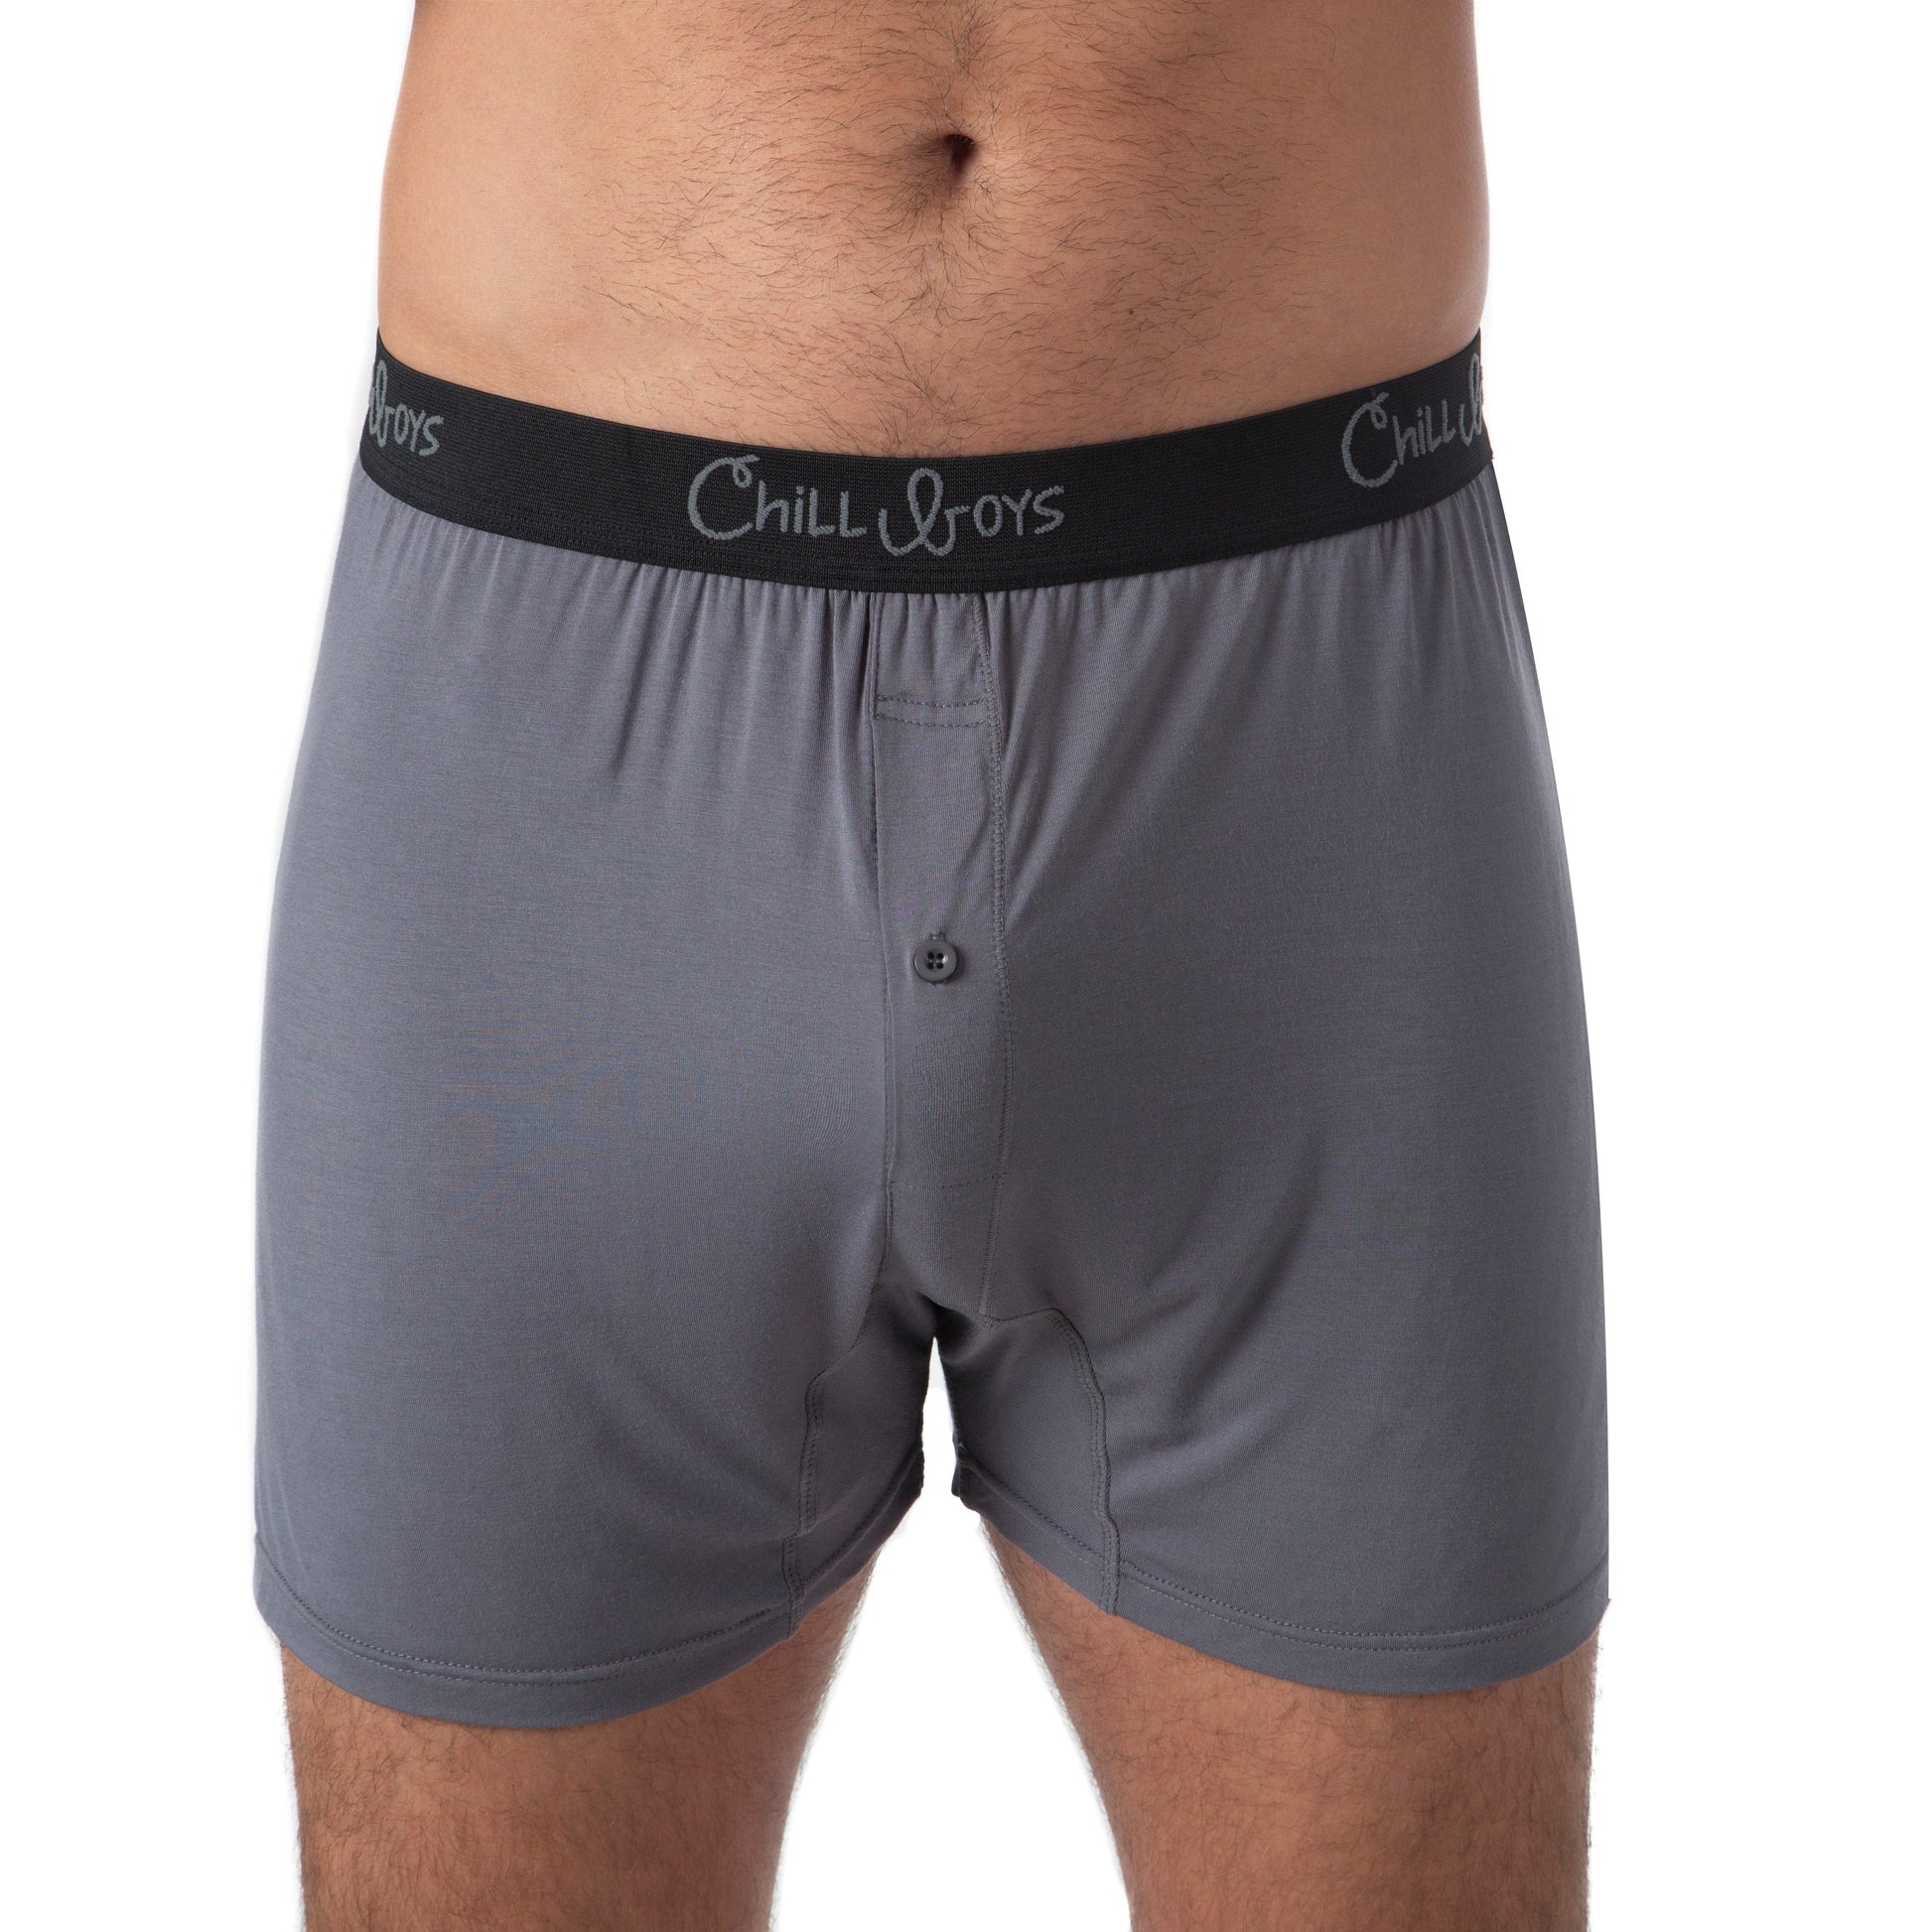 bamboo underwear grey boxers for men